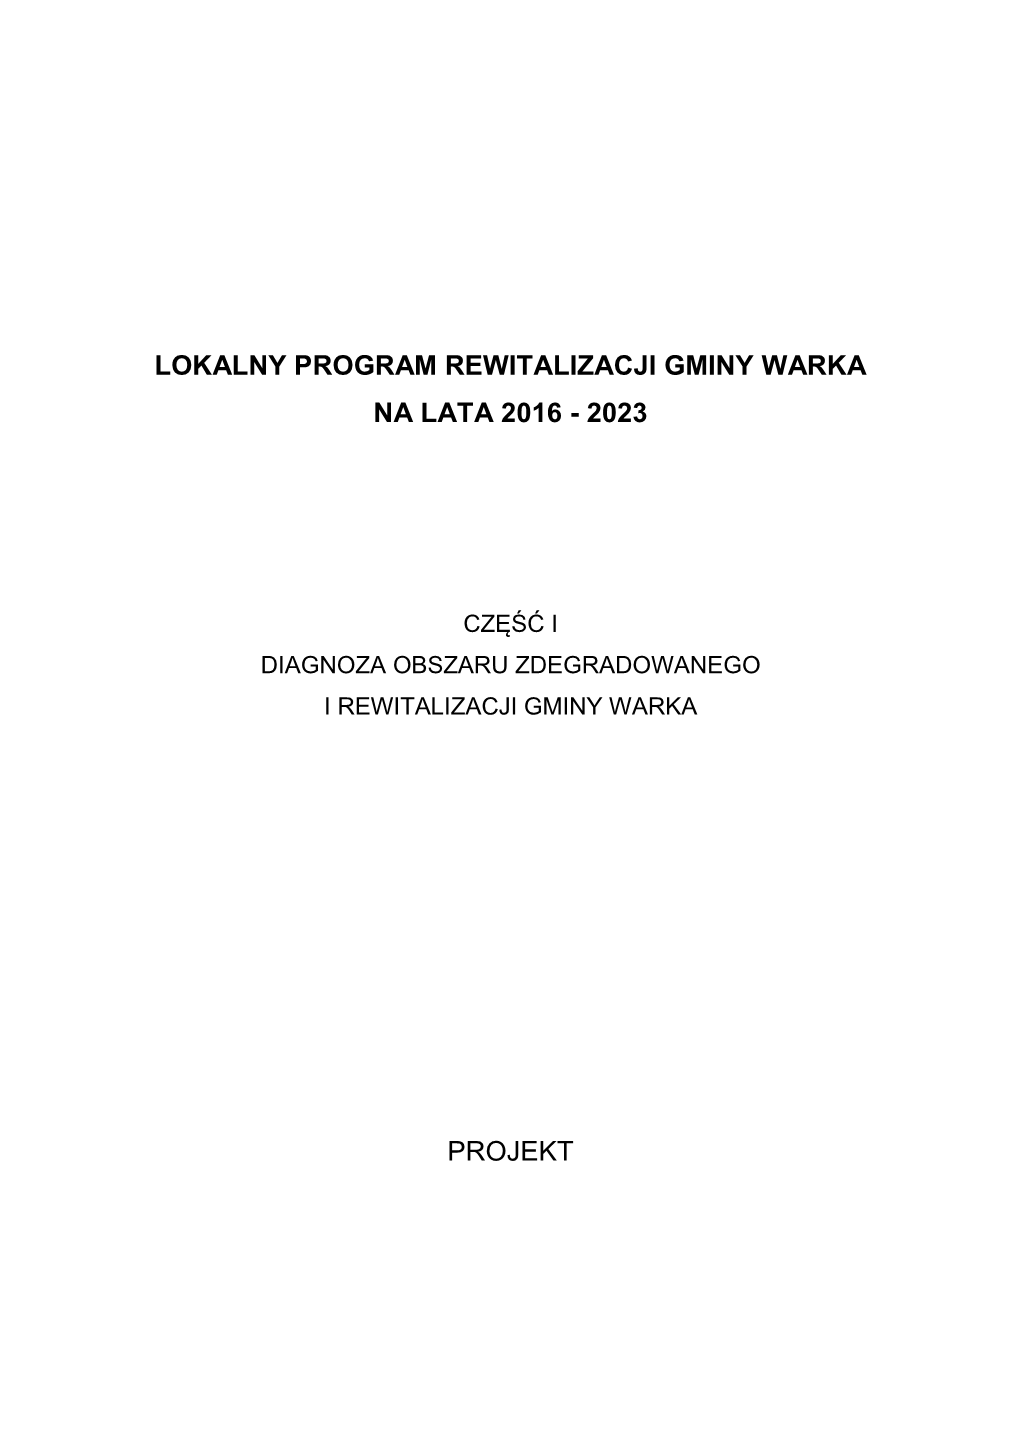 Lokalny Program Rewitalizacji Gminy Warka Na Lata 2016 - 2023